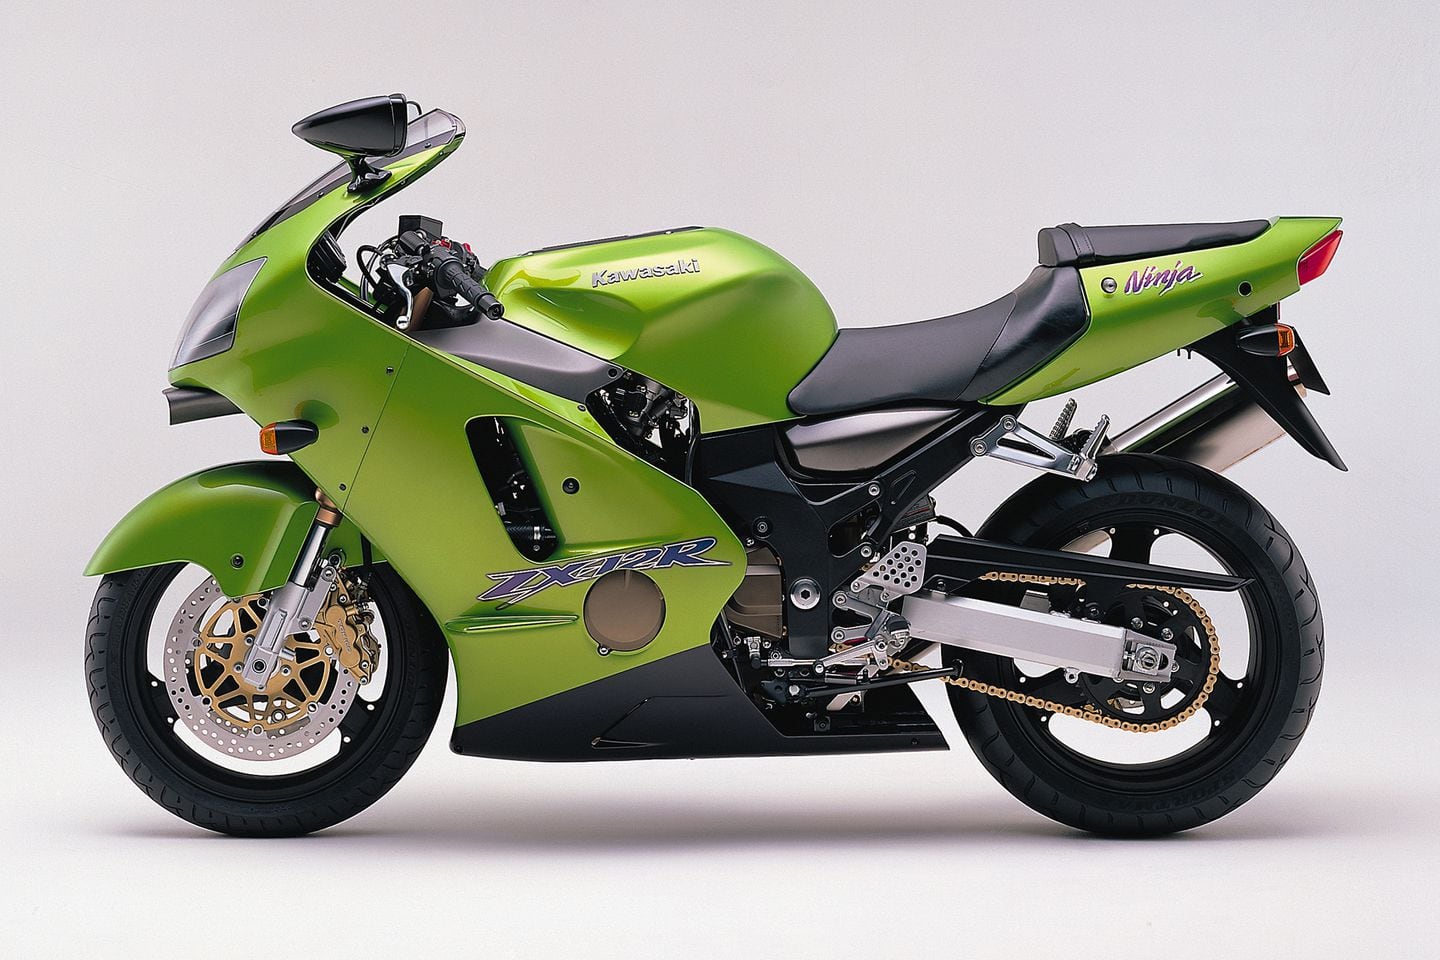 Kawasaki Ninja ZX-12R Sportbike Road Test Review | Cycle World